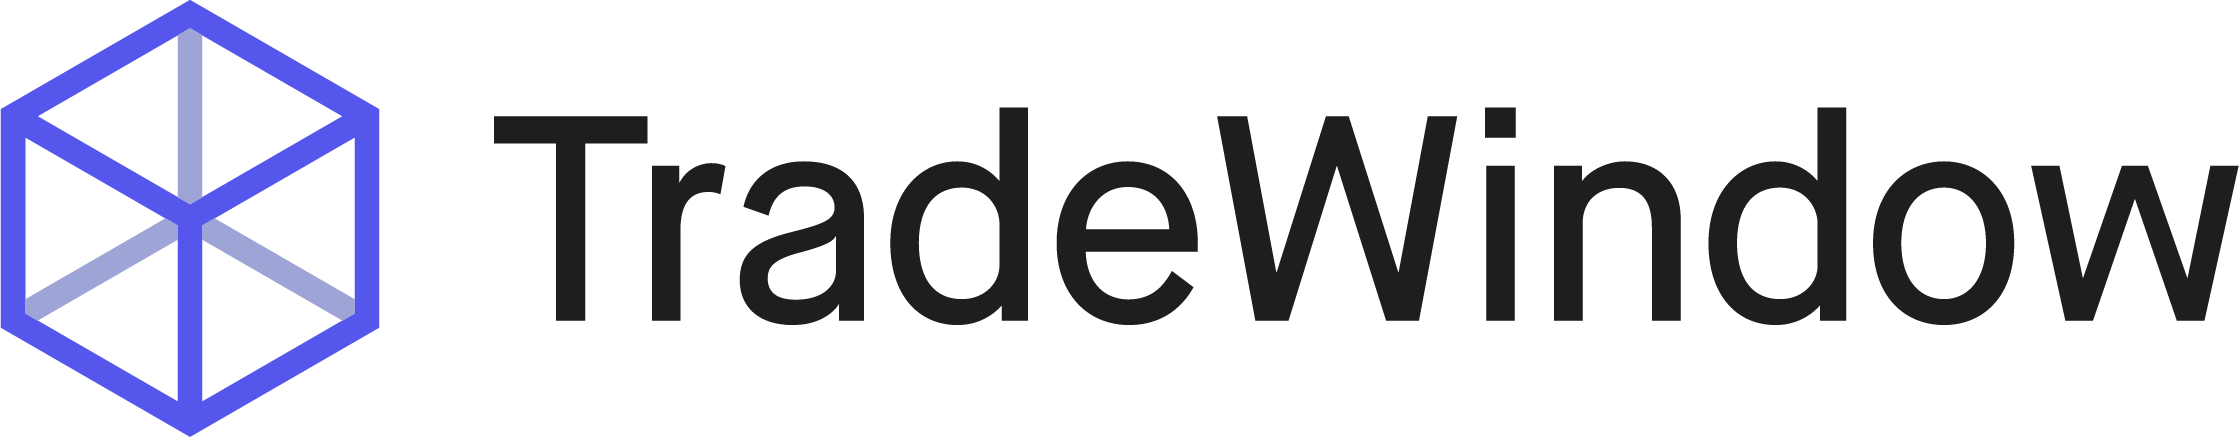 TradeWindow_logo